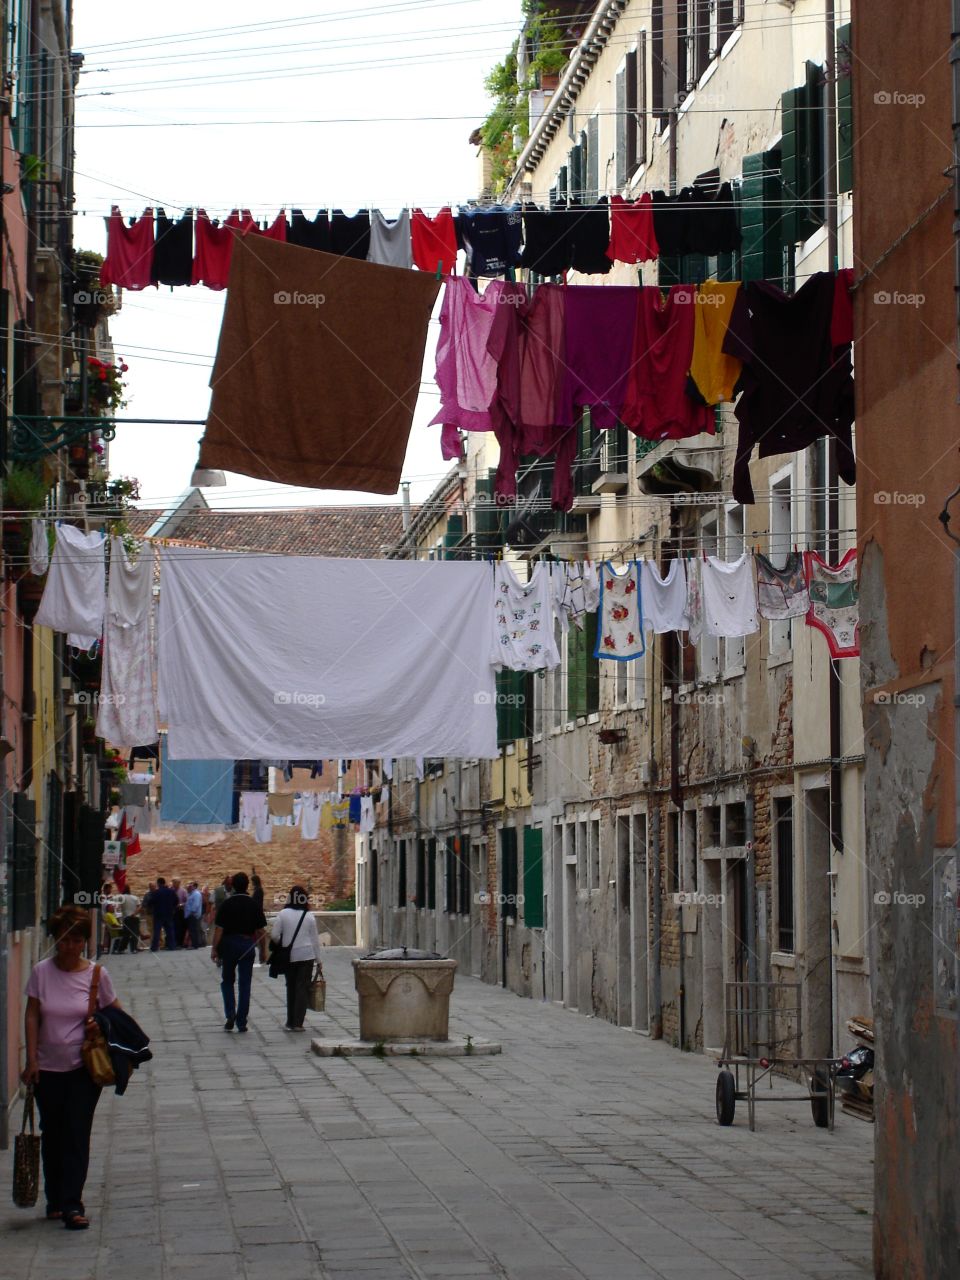 Venetian streets